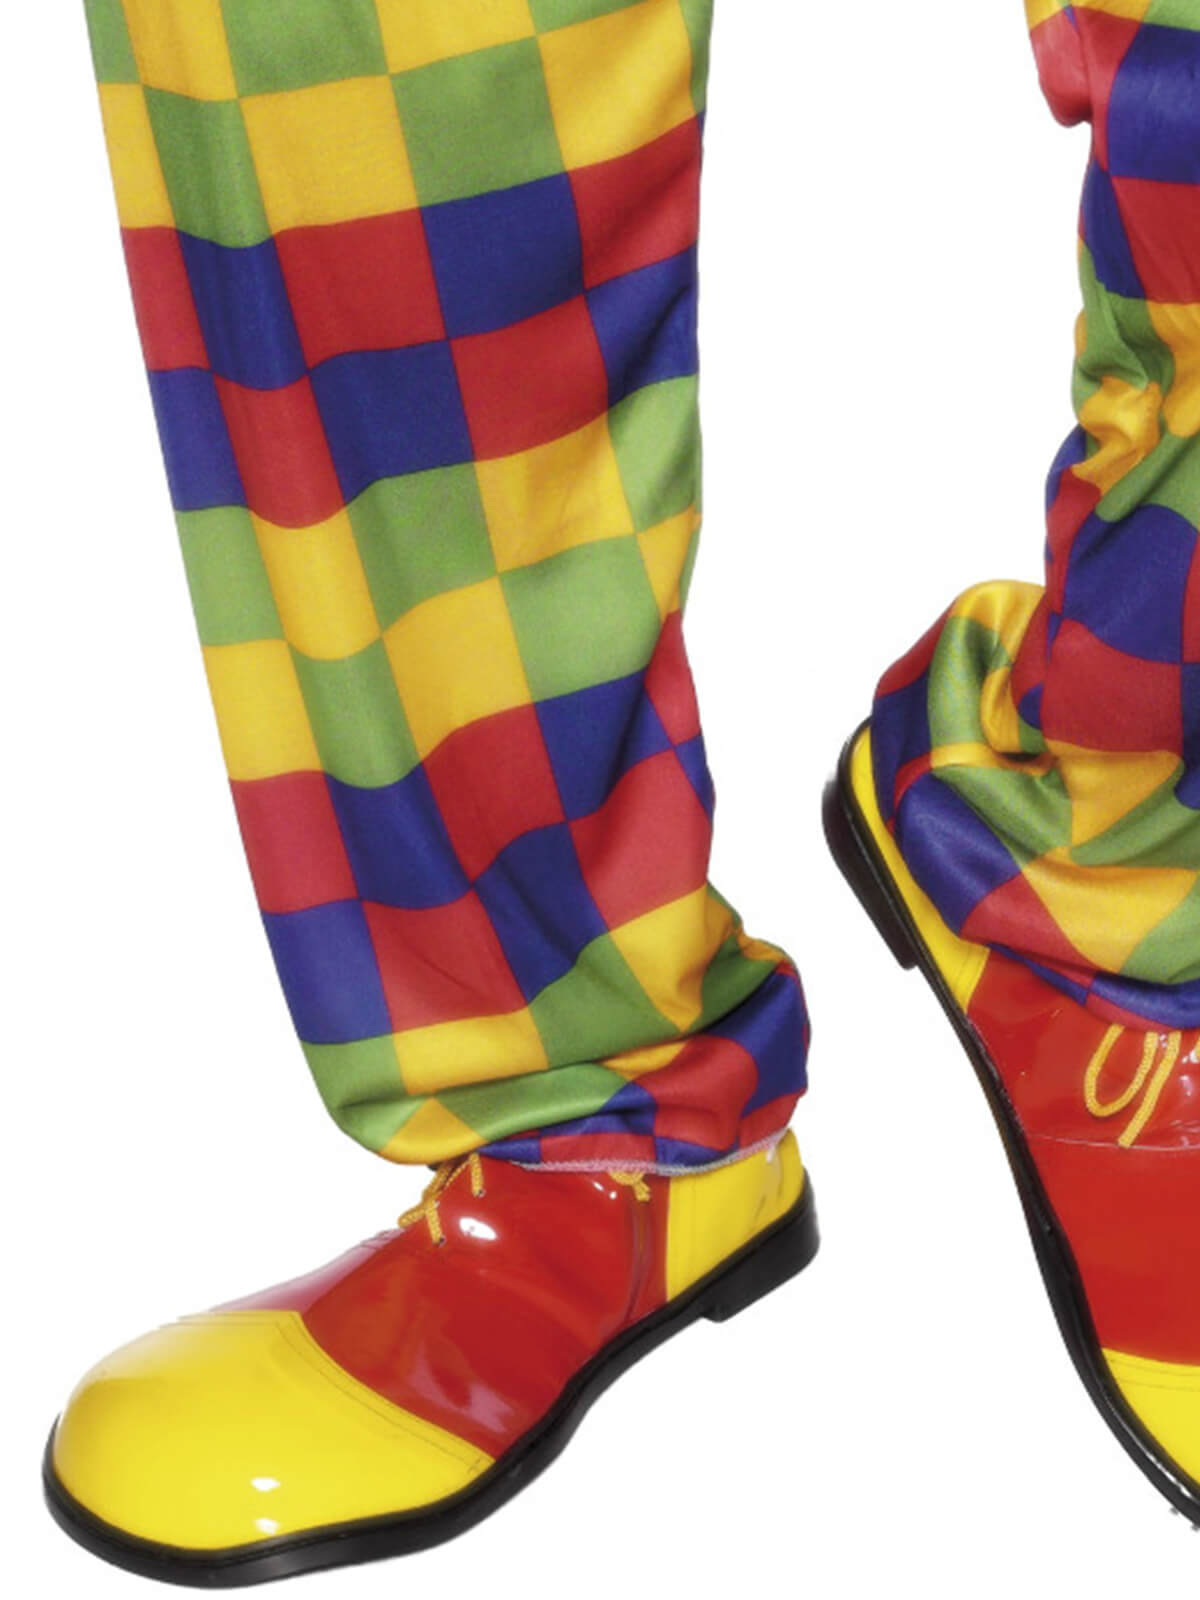 Deluxe Clown Shoes